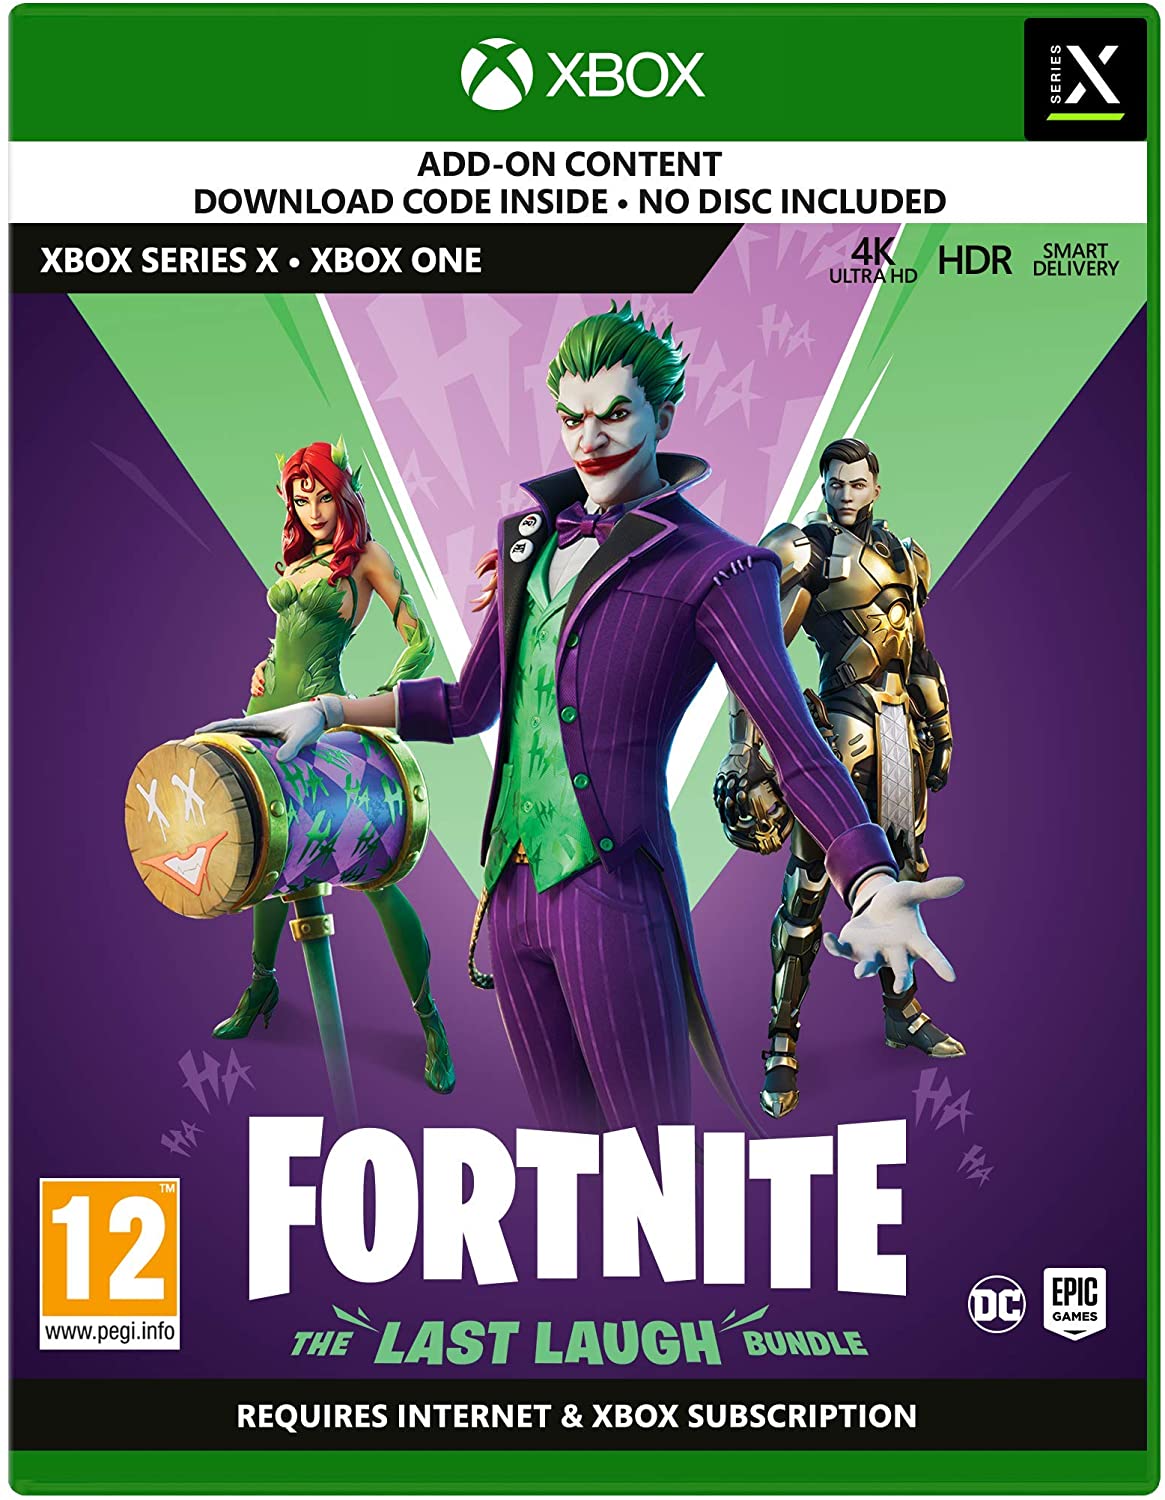 Fortnite: The Last Laugh Bundle Digital Download Key (Xbox One/Series X): USA